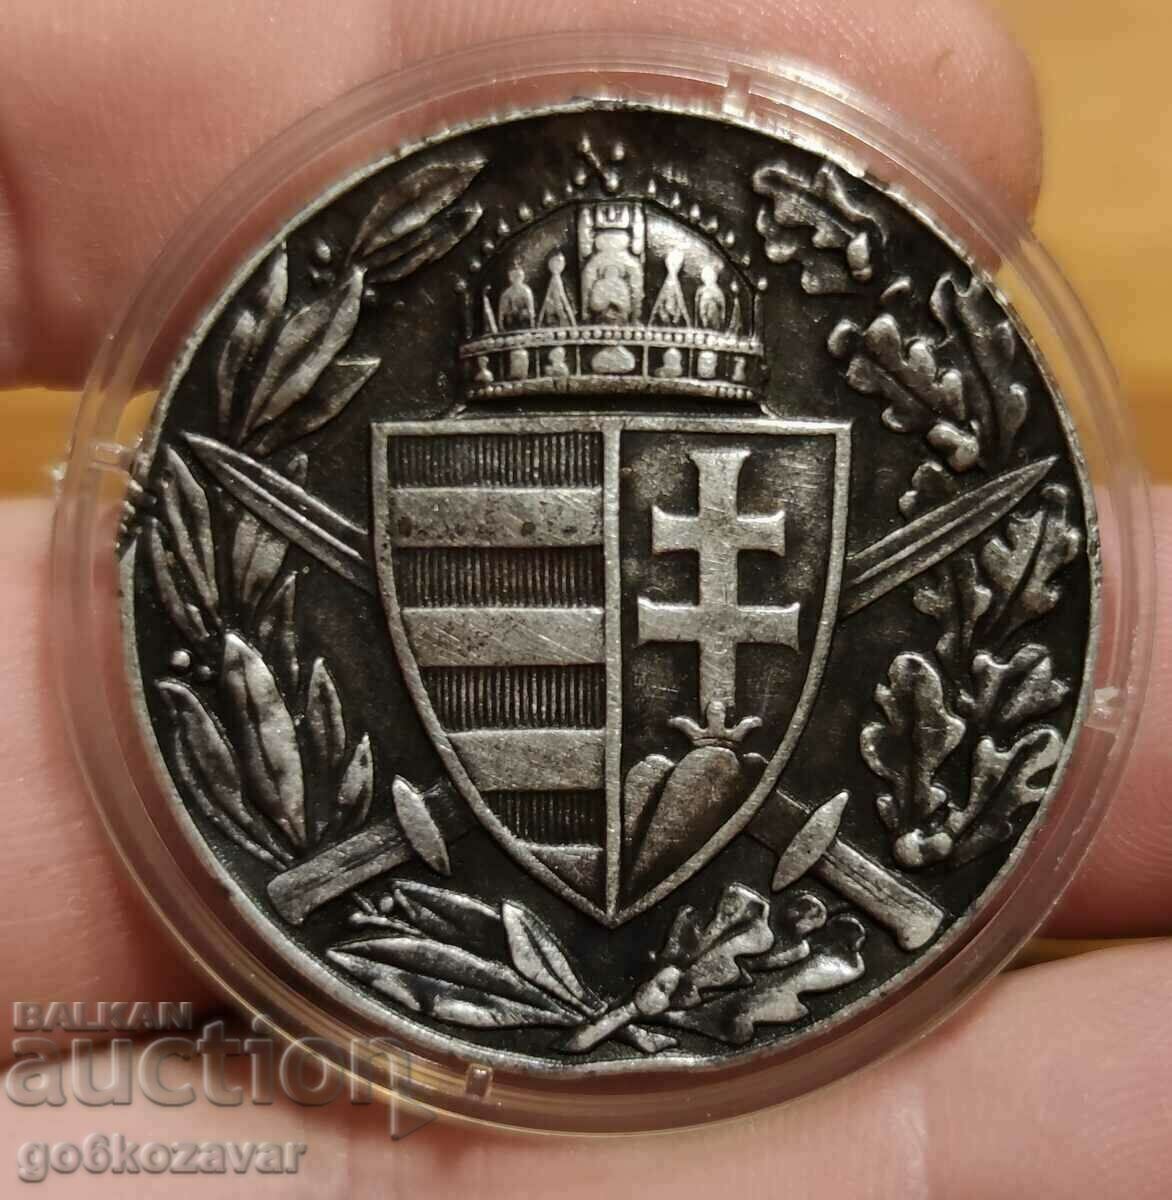 Medalia Austro-Ungaria Primul Război Mondial Placă de argint! 1914-1918 Original